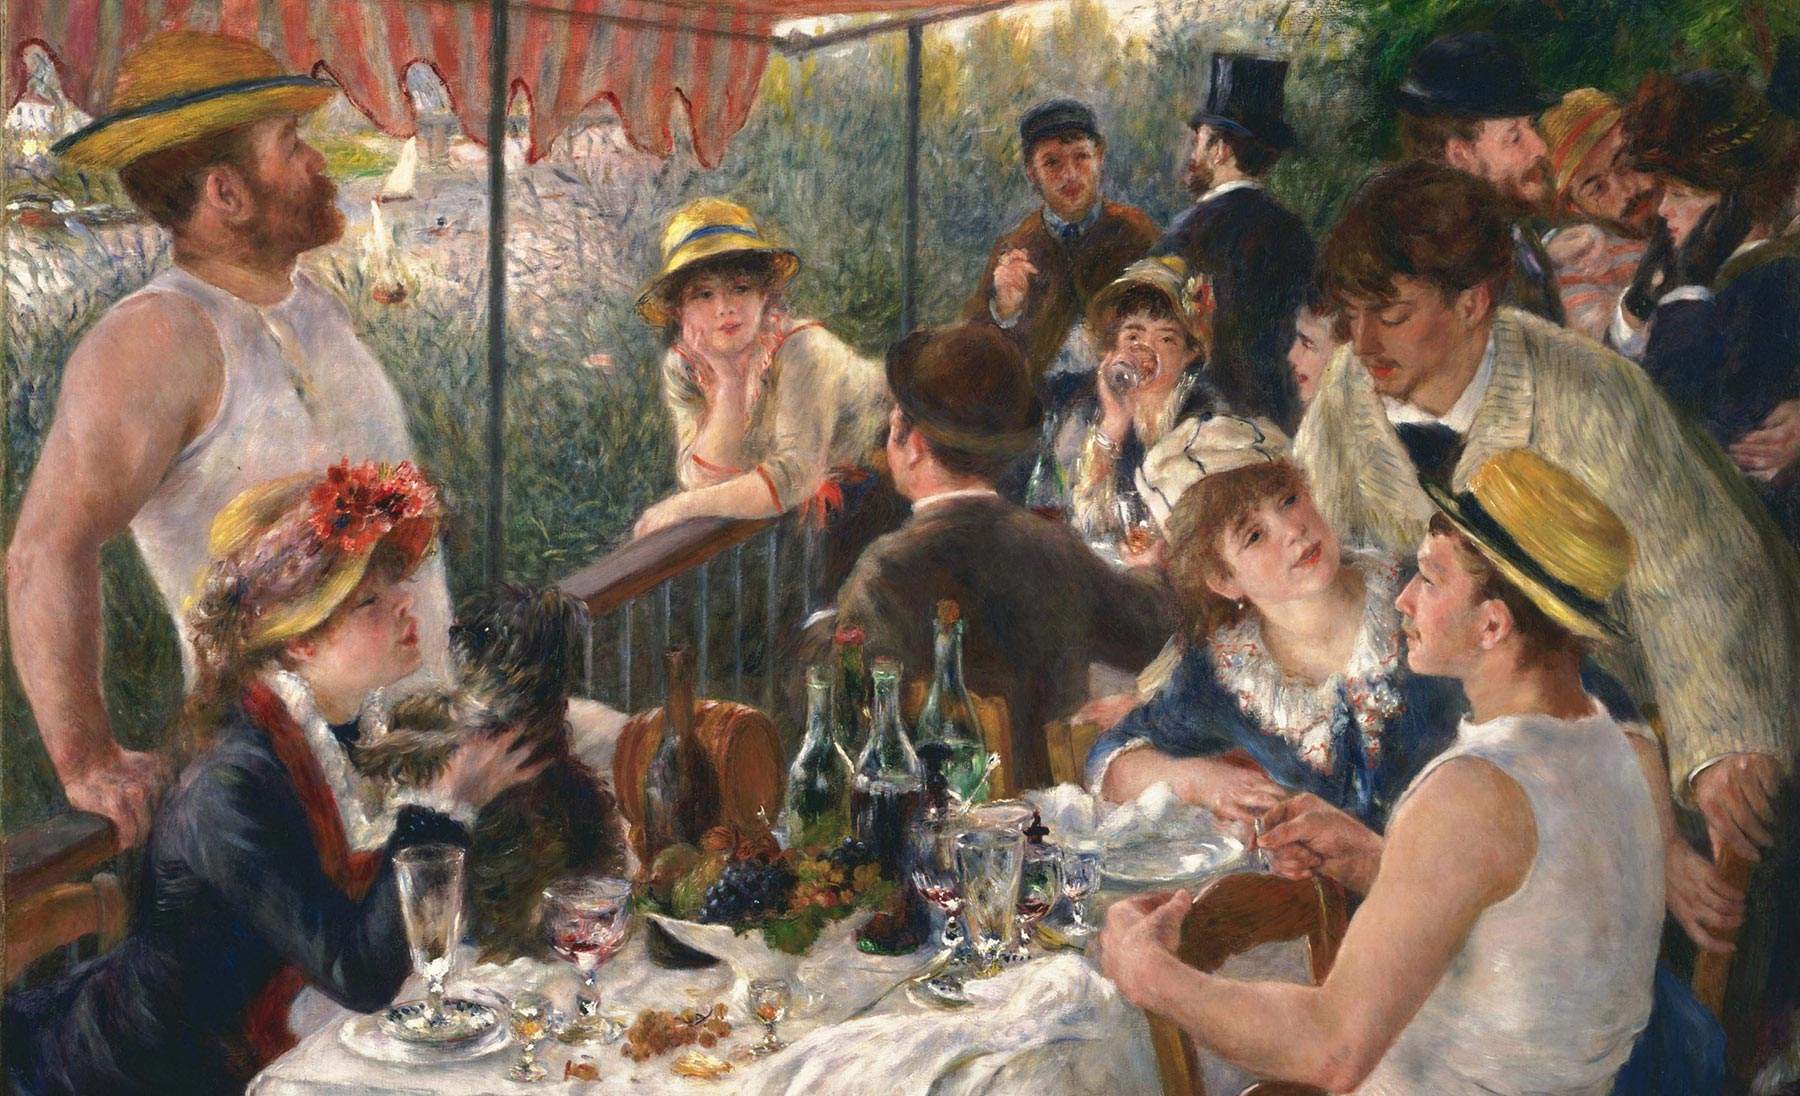 Pierre-Auguste Renoir, life and works of the impressionist of joie de vivre